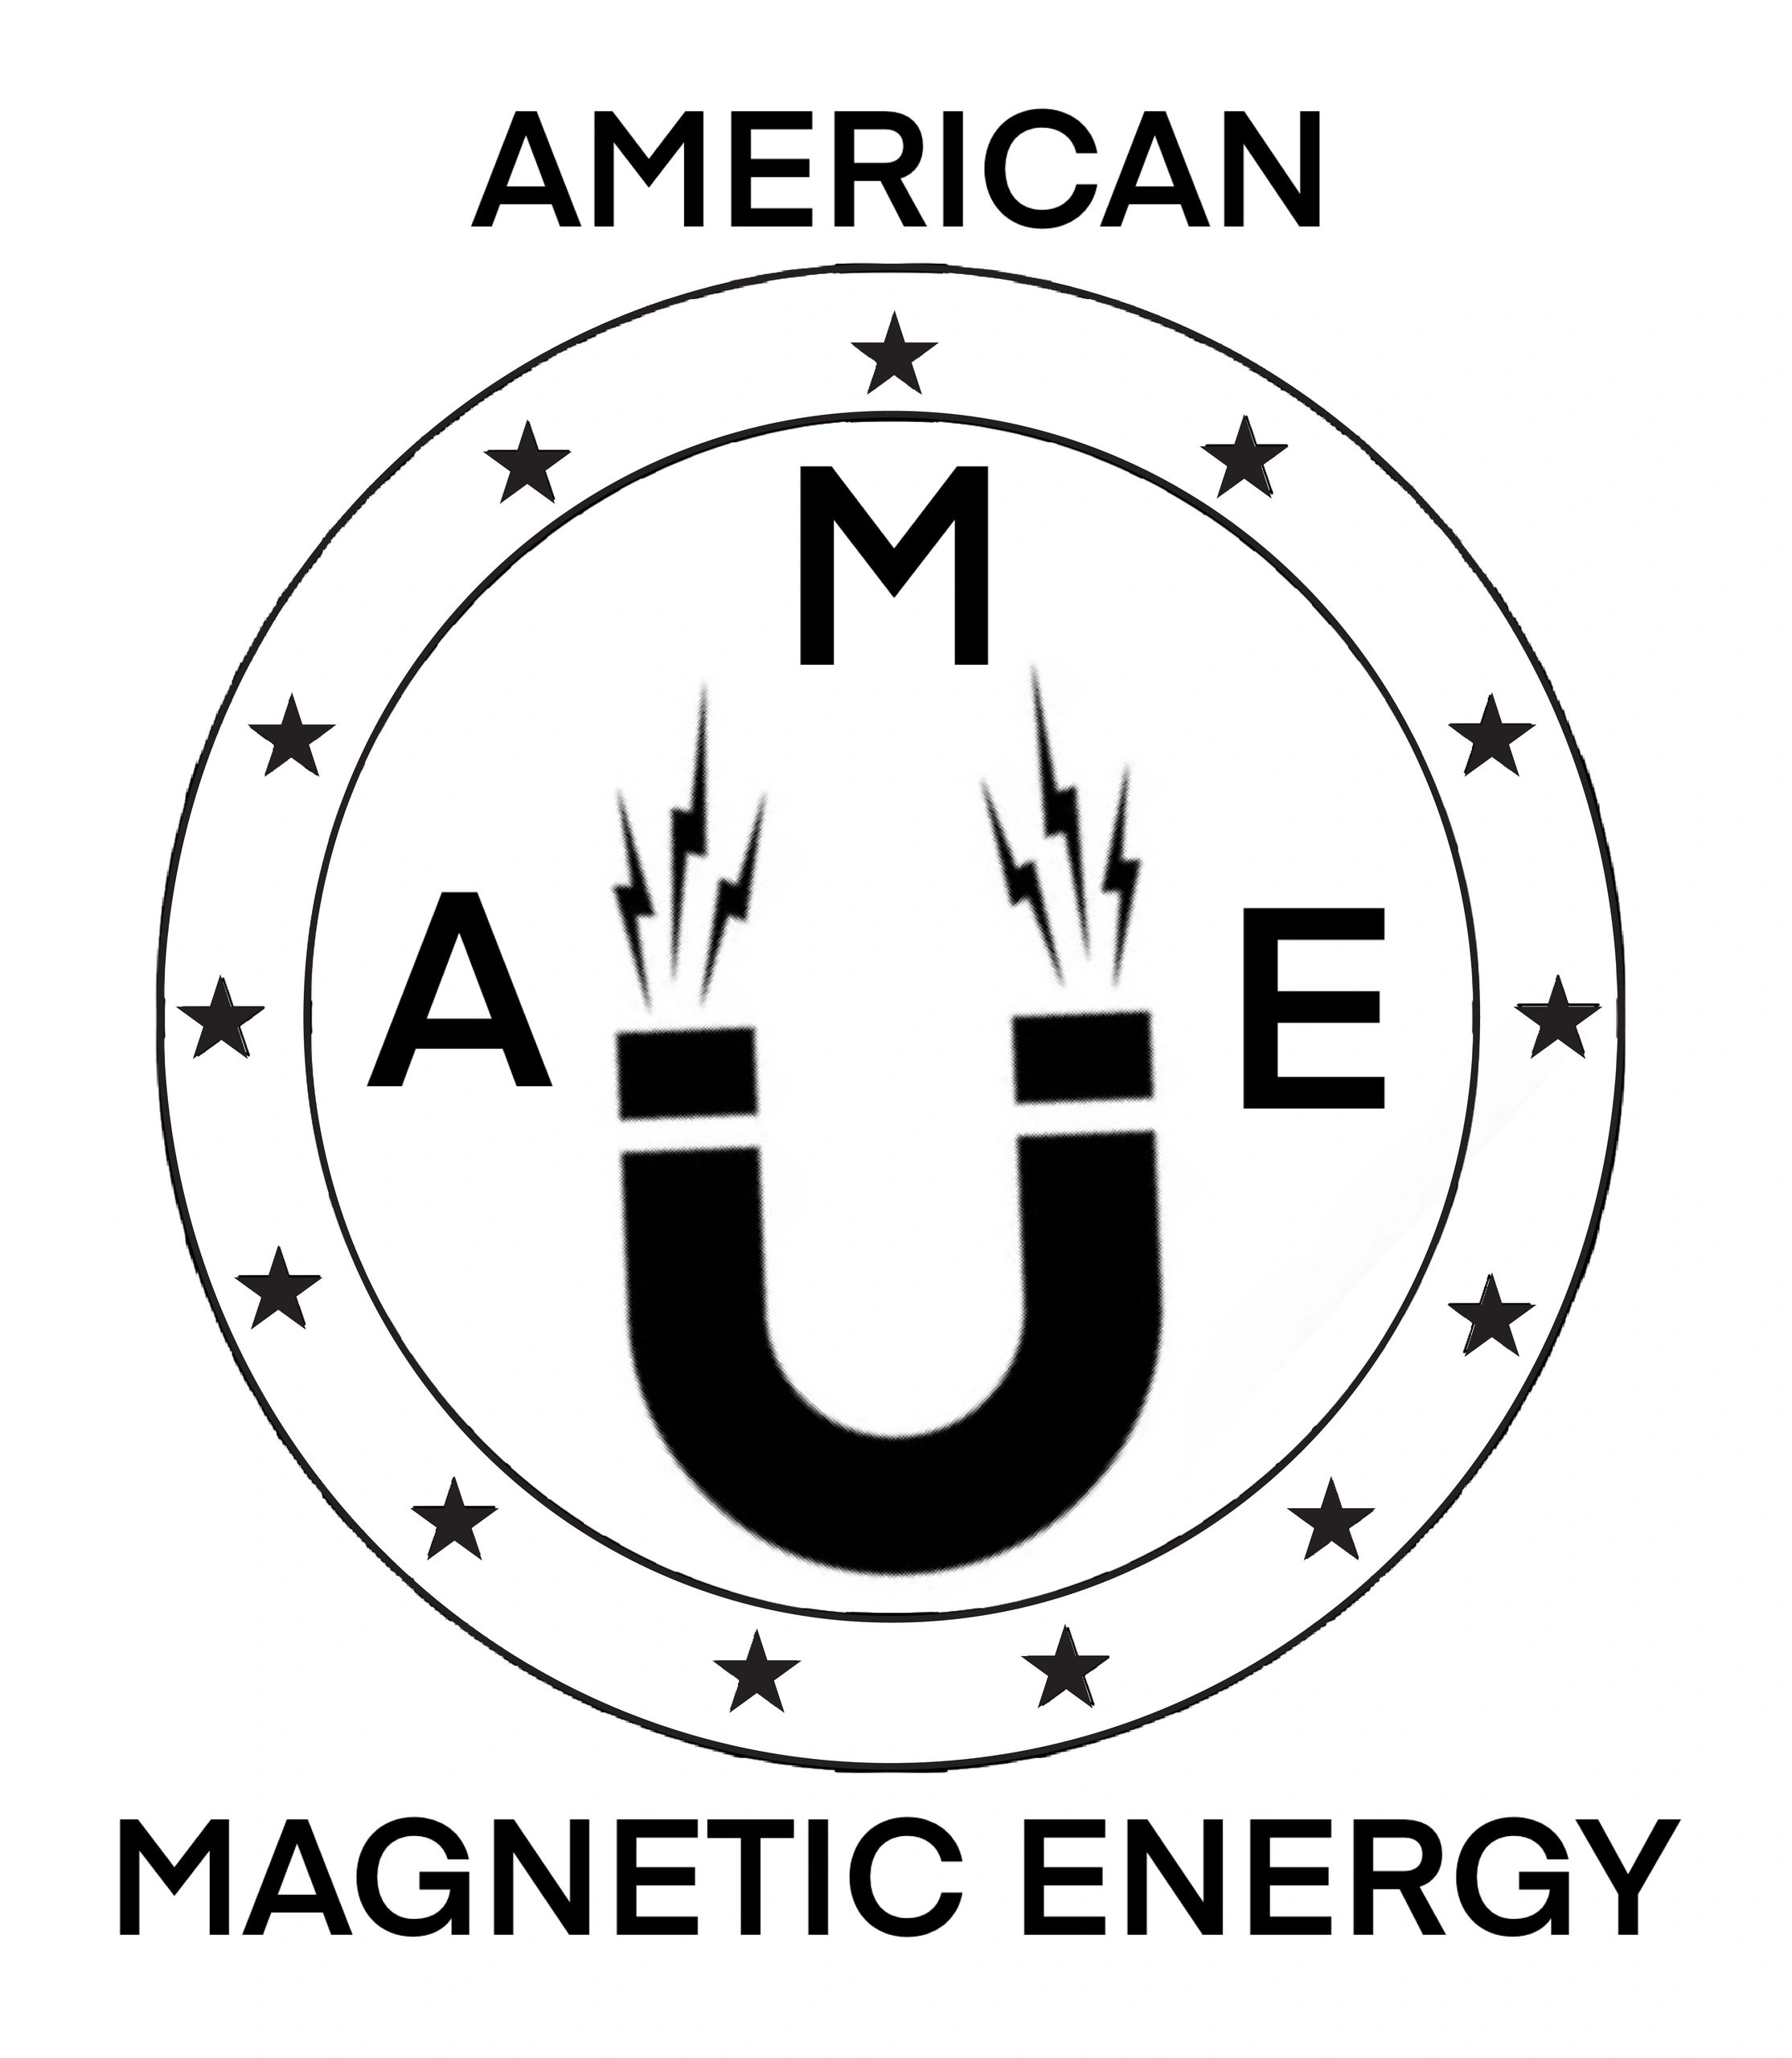 Magnetic Energy